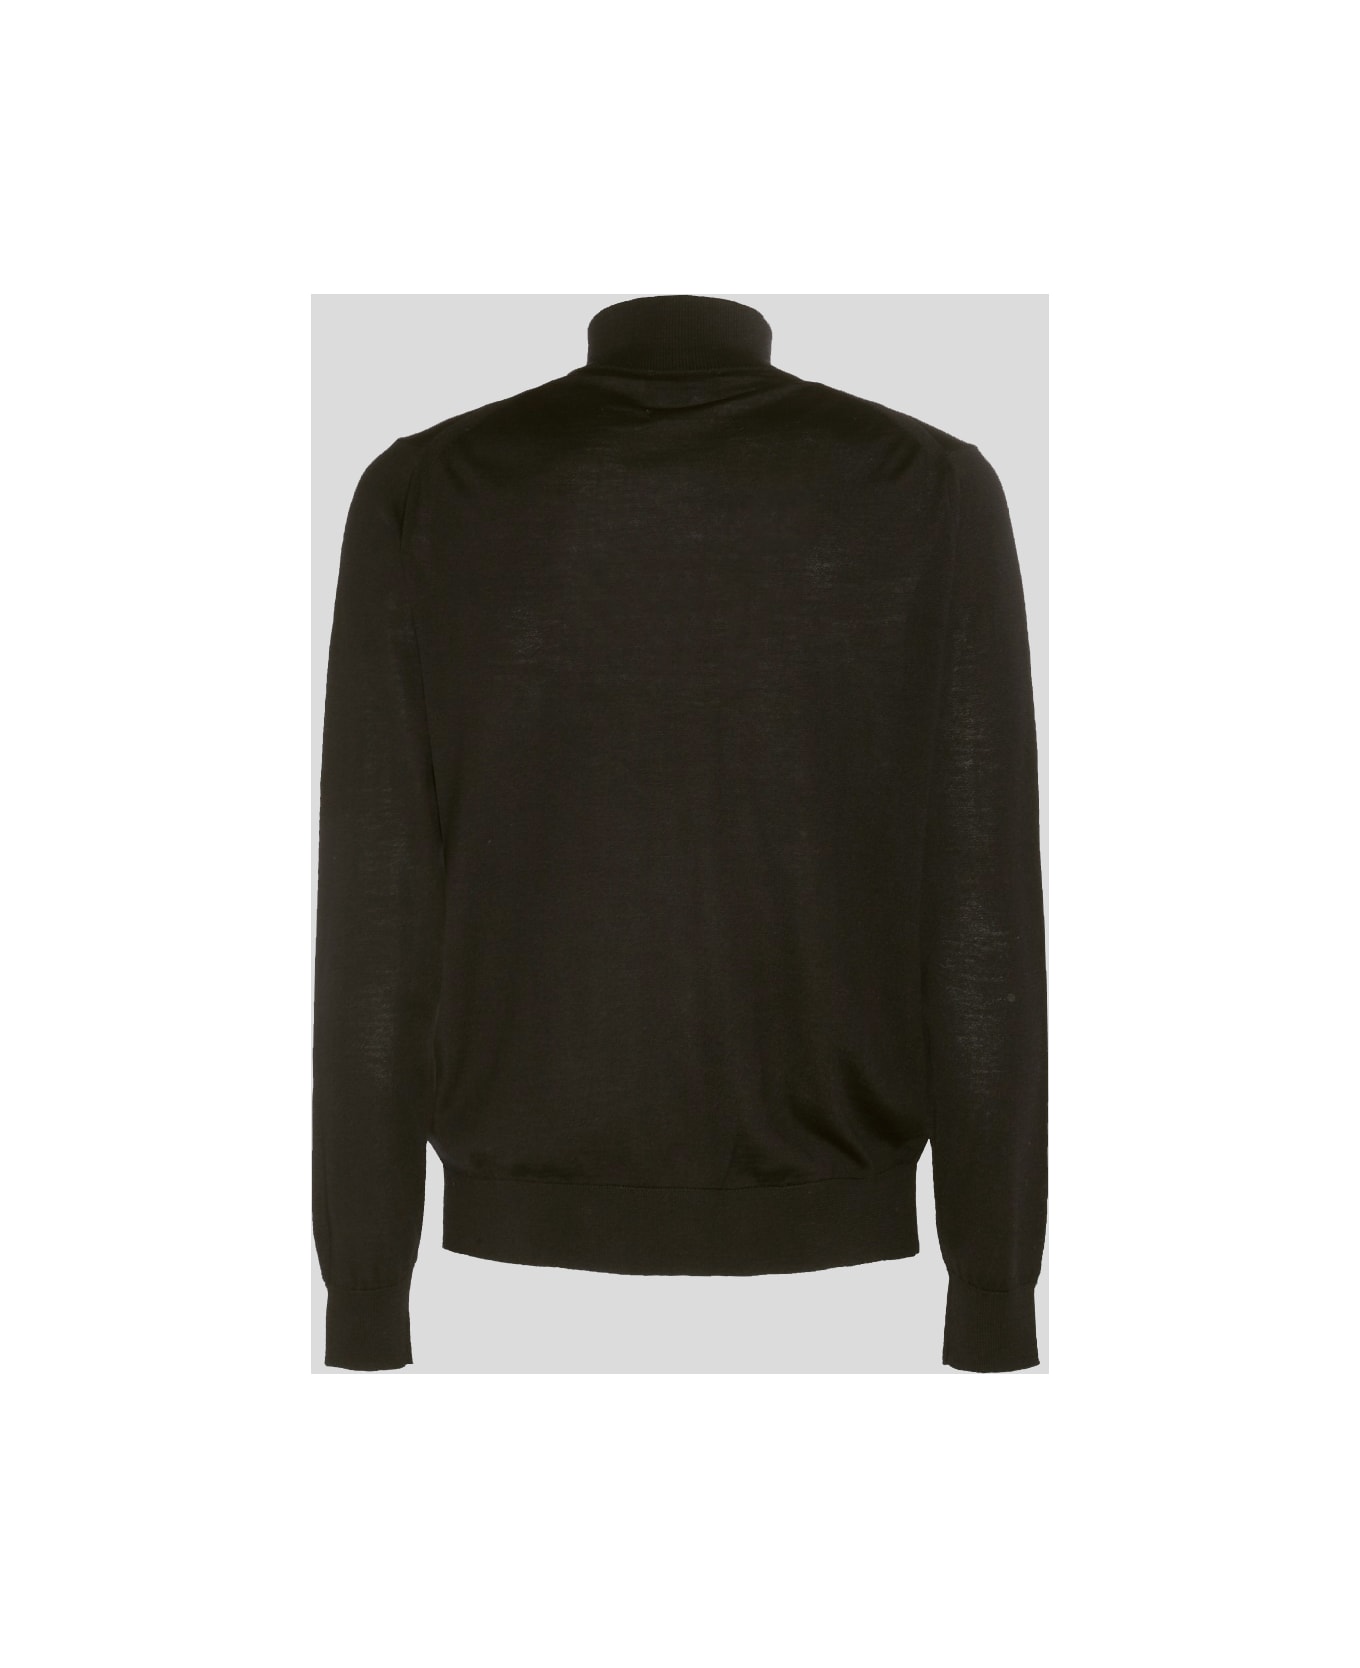 Emporio Armani Military Cotton Blend Sweater - Green ニットウェア